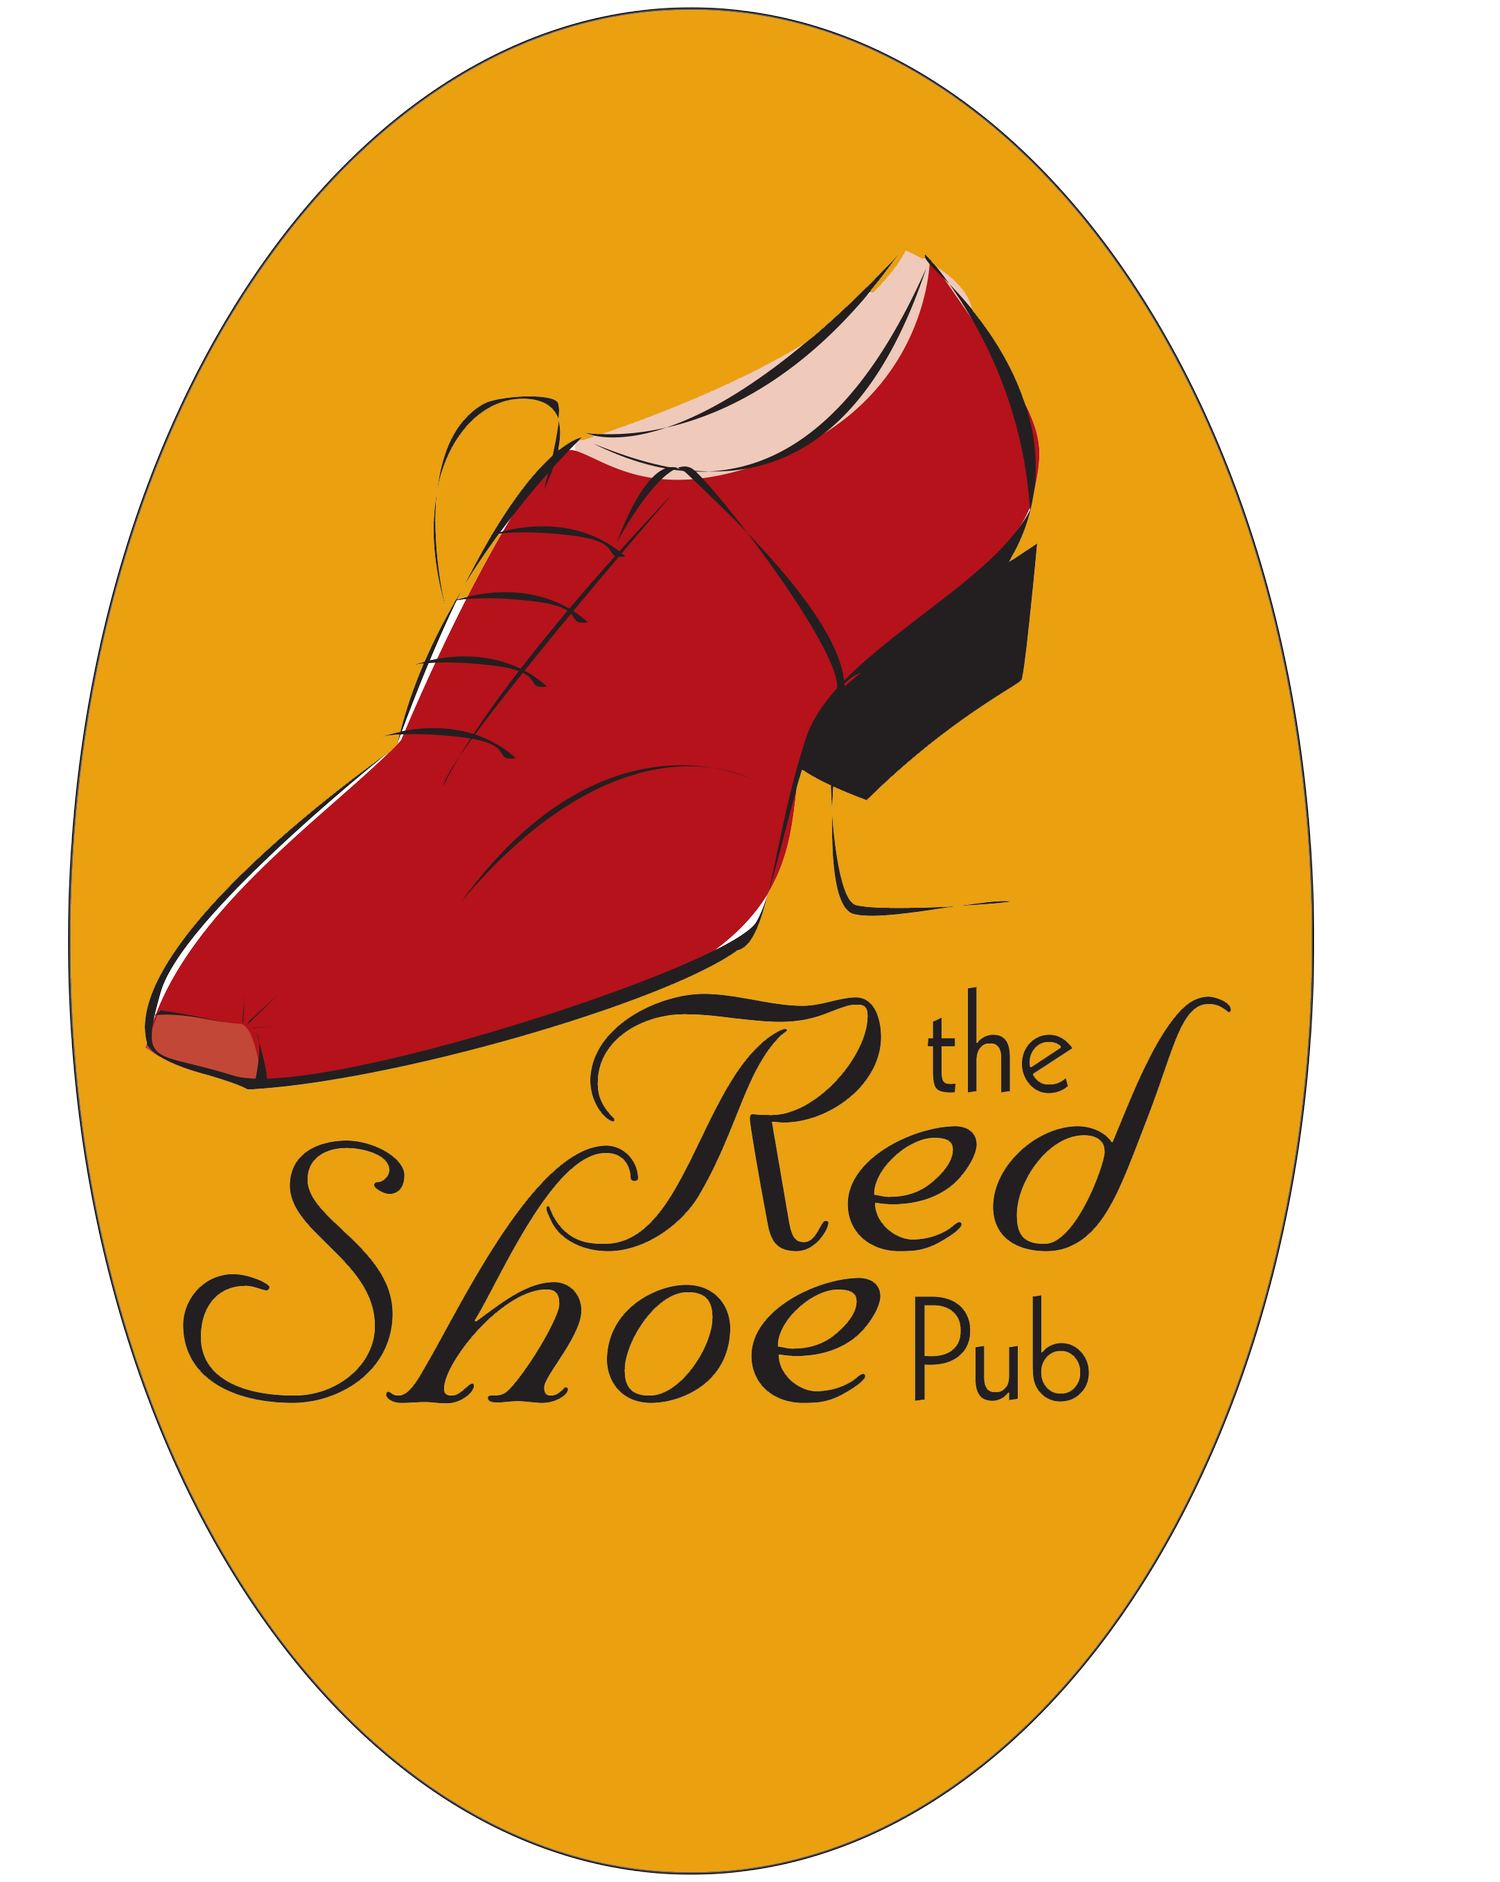 Red Shoe Pub